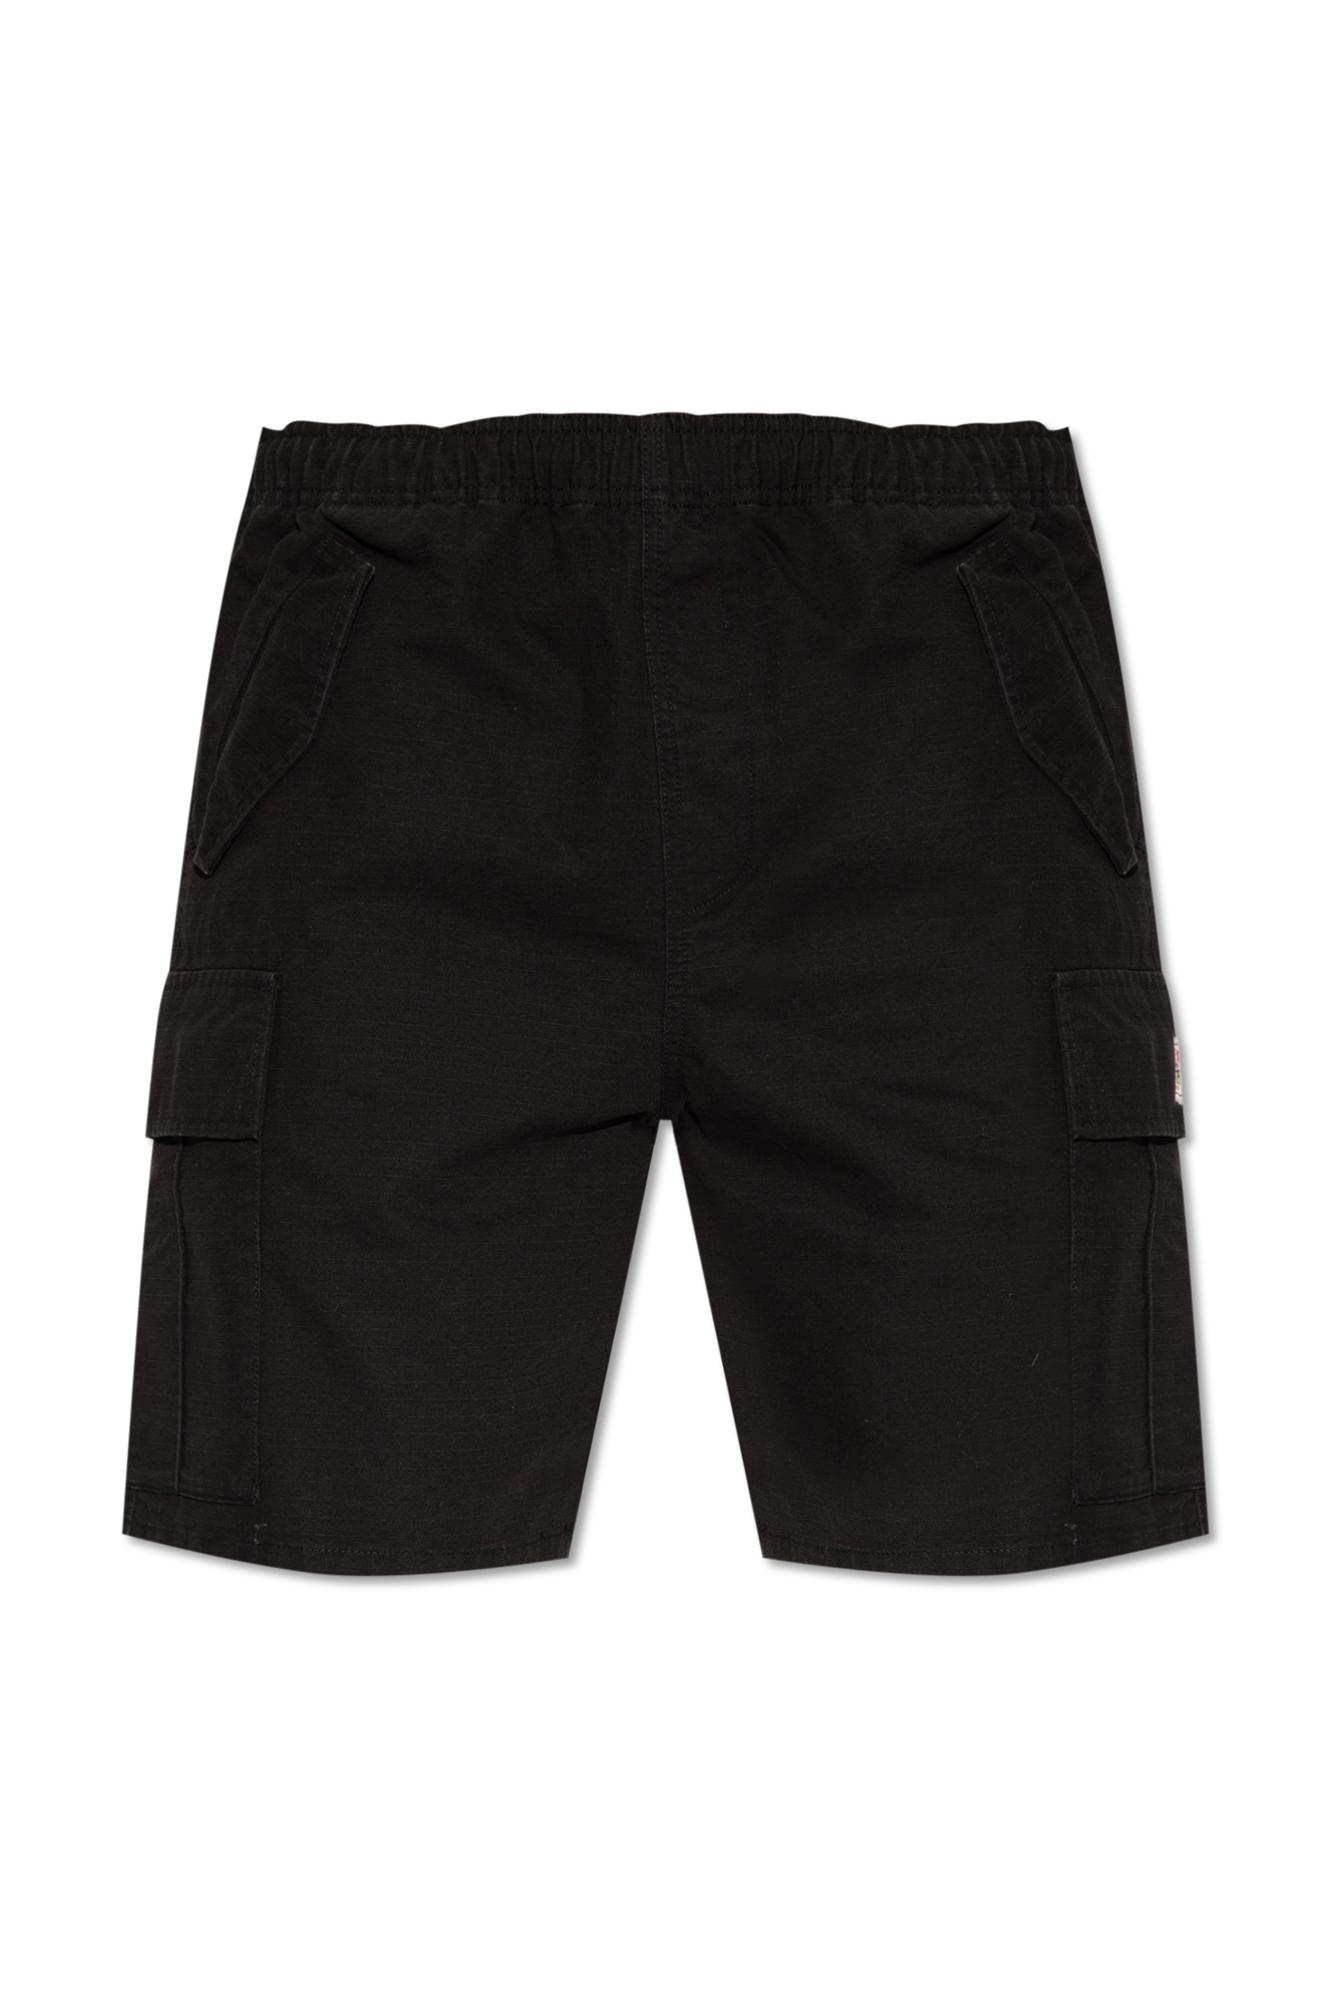 Stussy Cargo Shorts in Black | Lyst